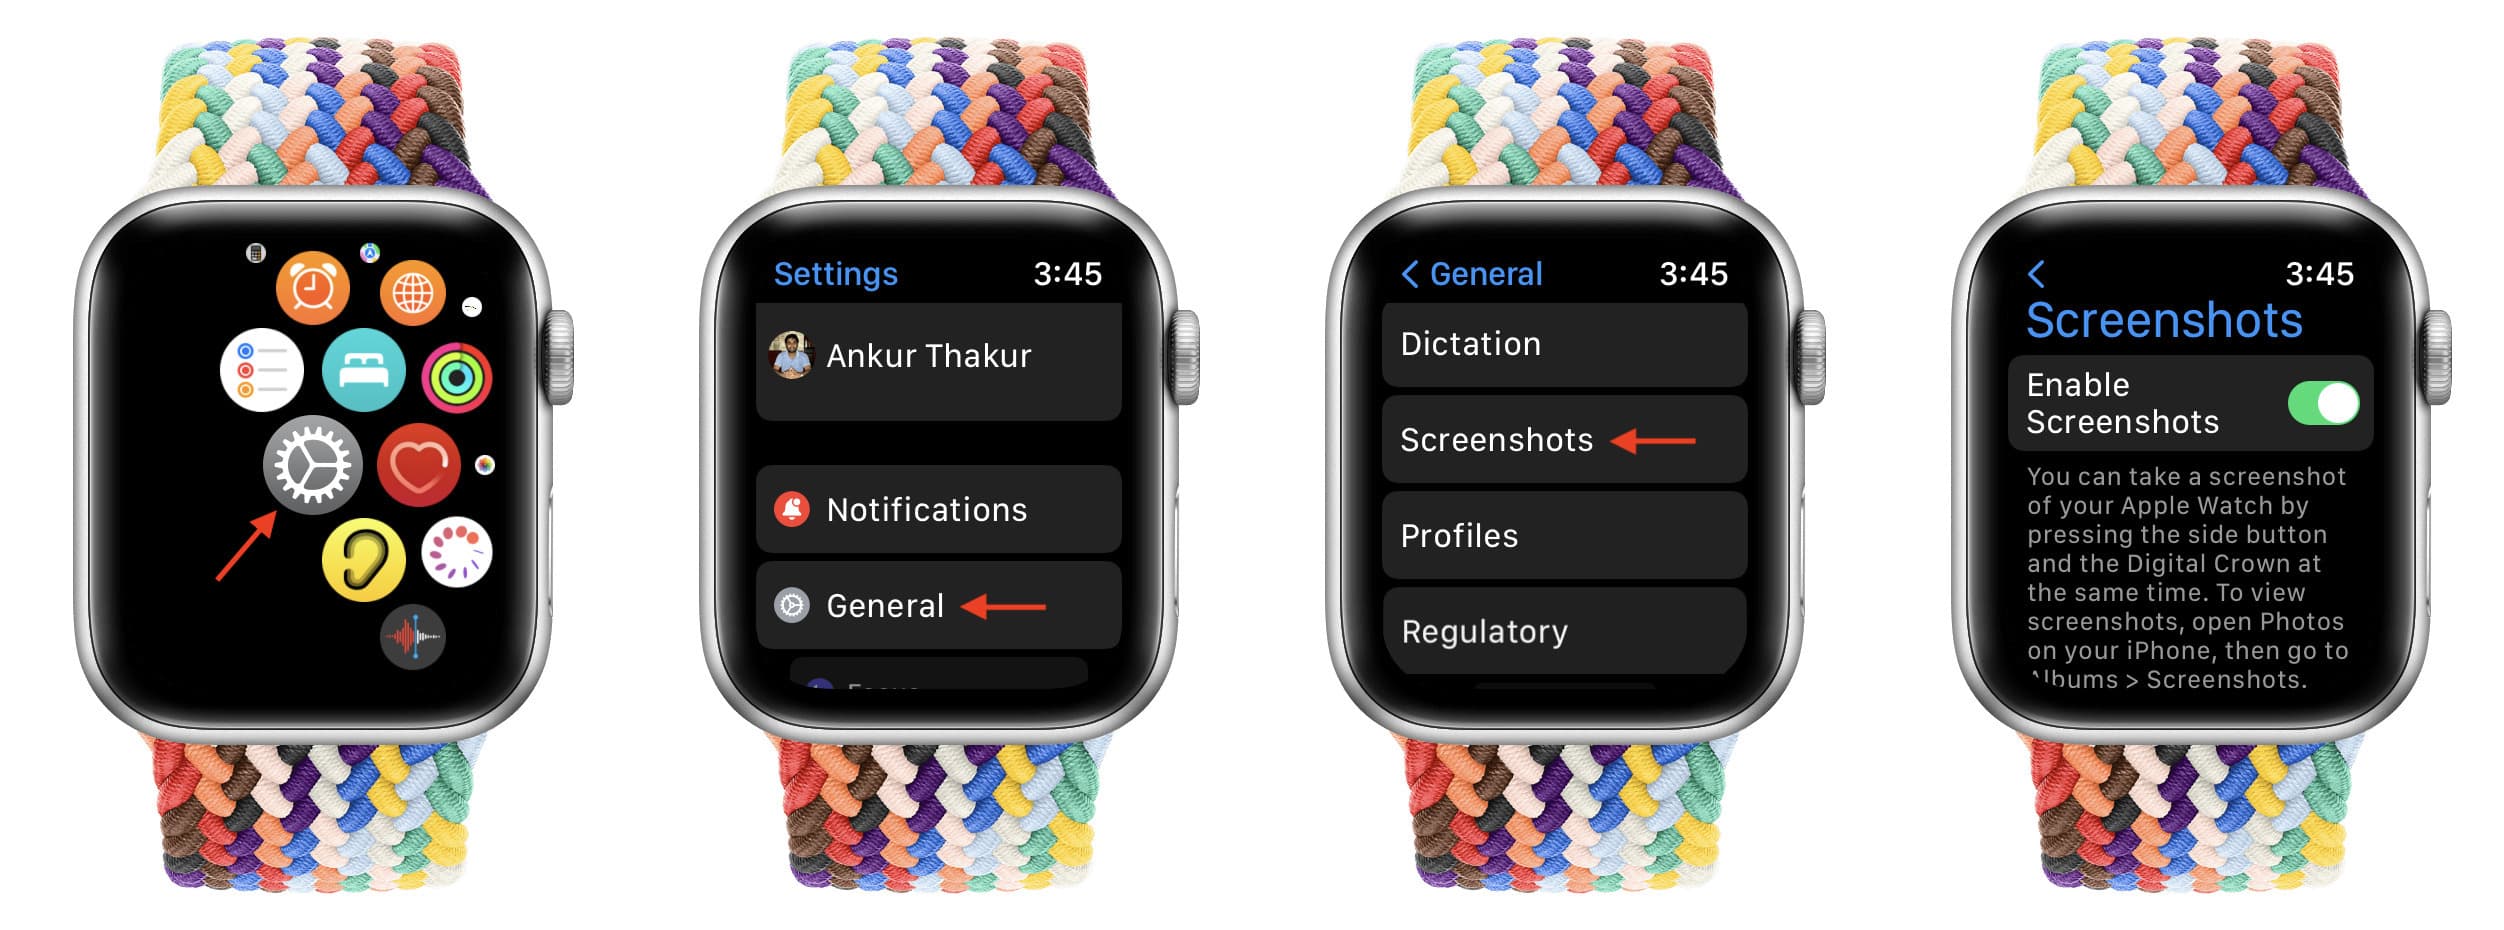 Enable Screenshots on Apple Watch